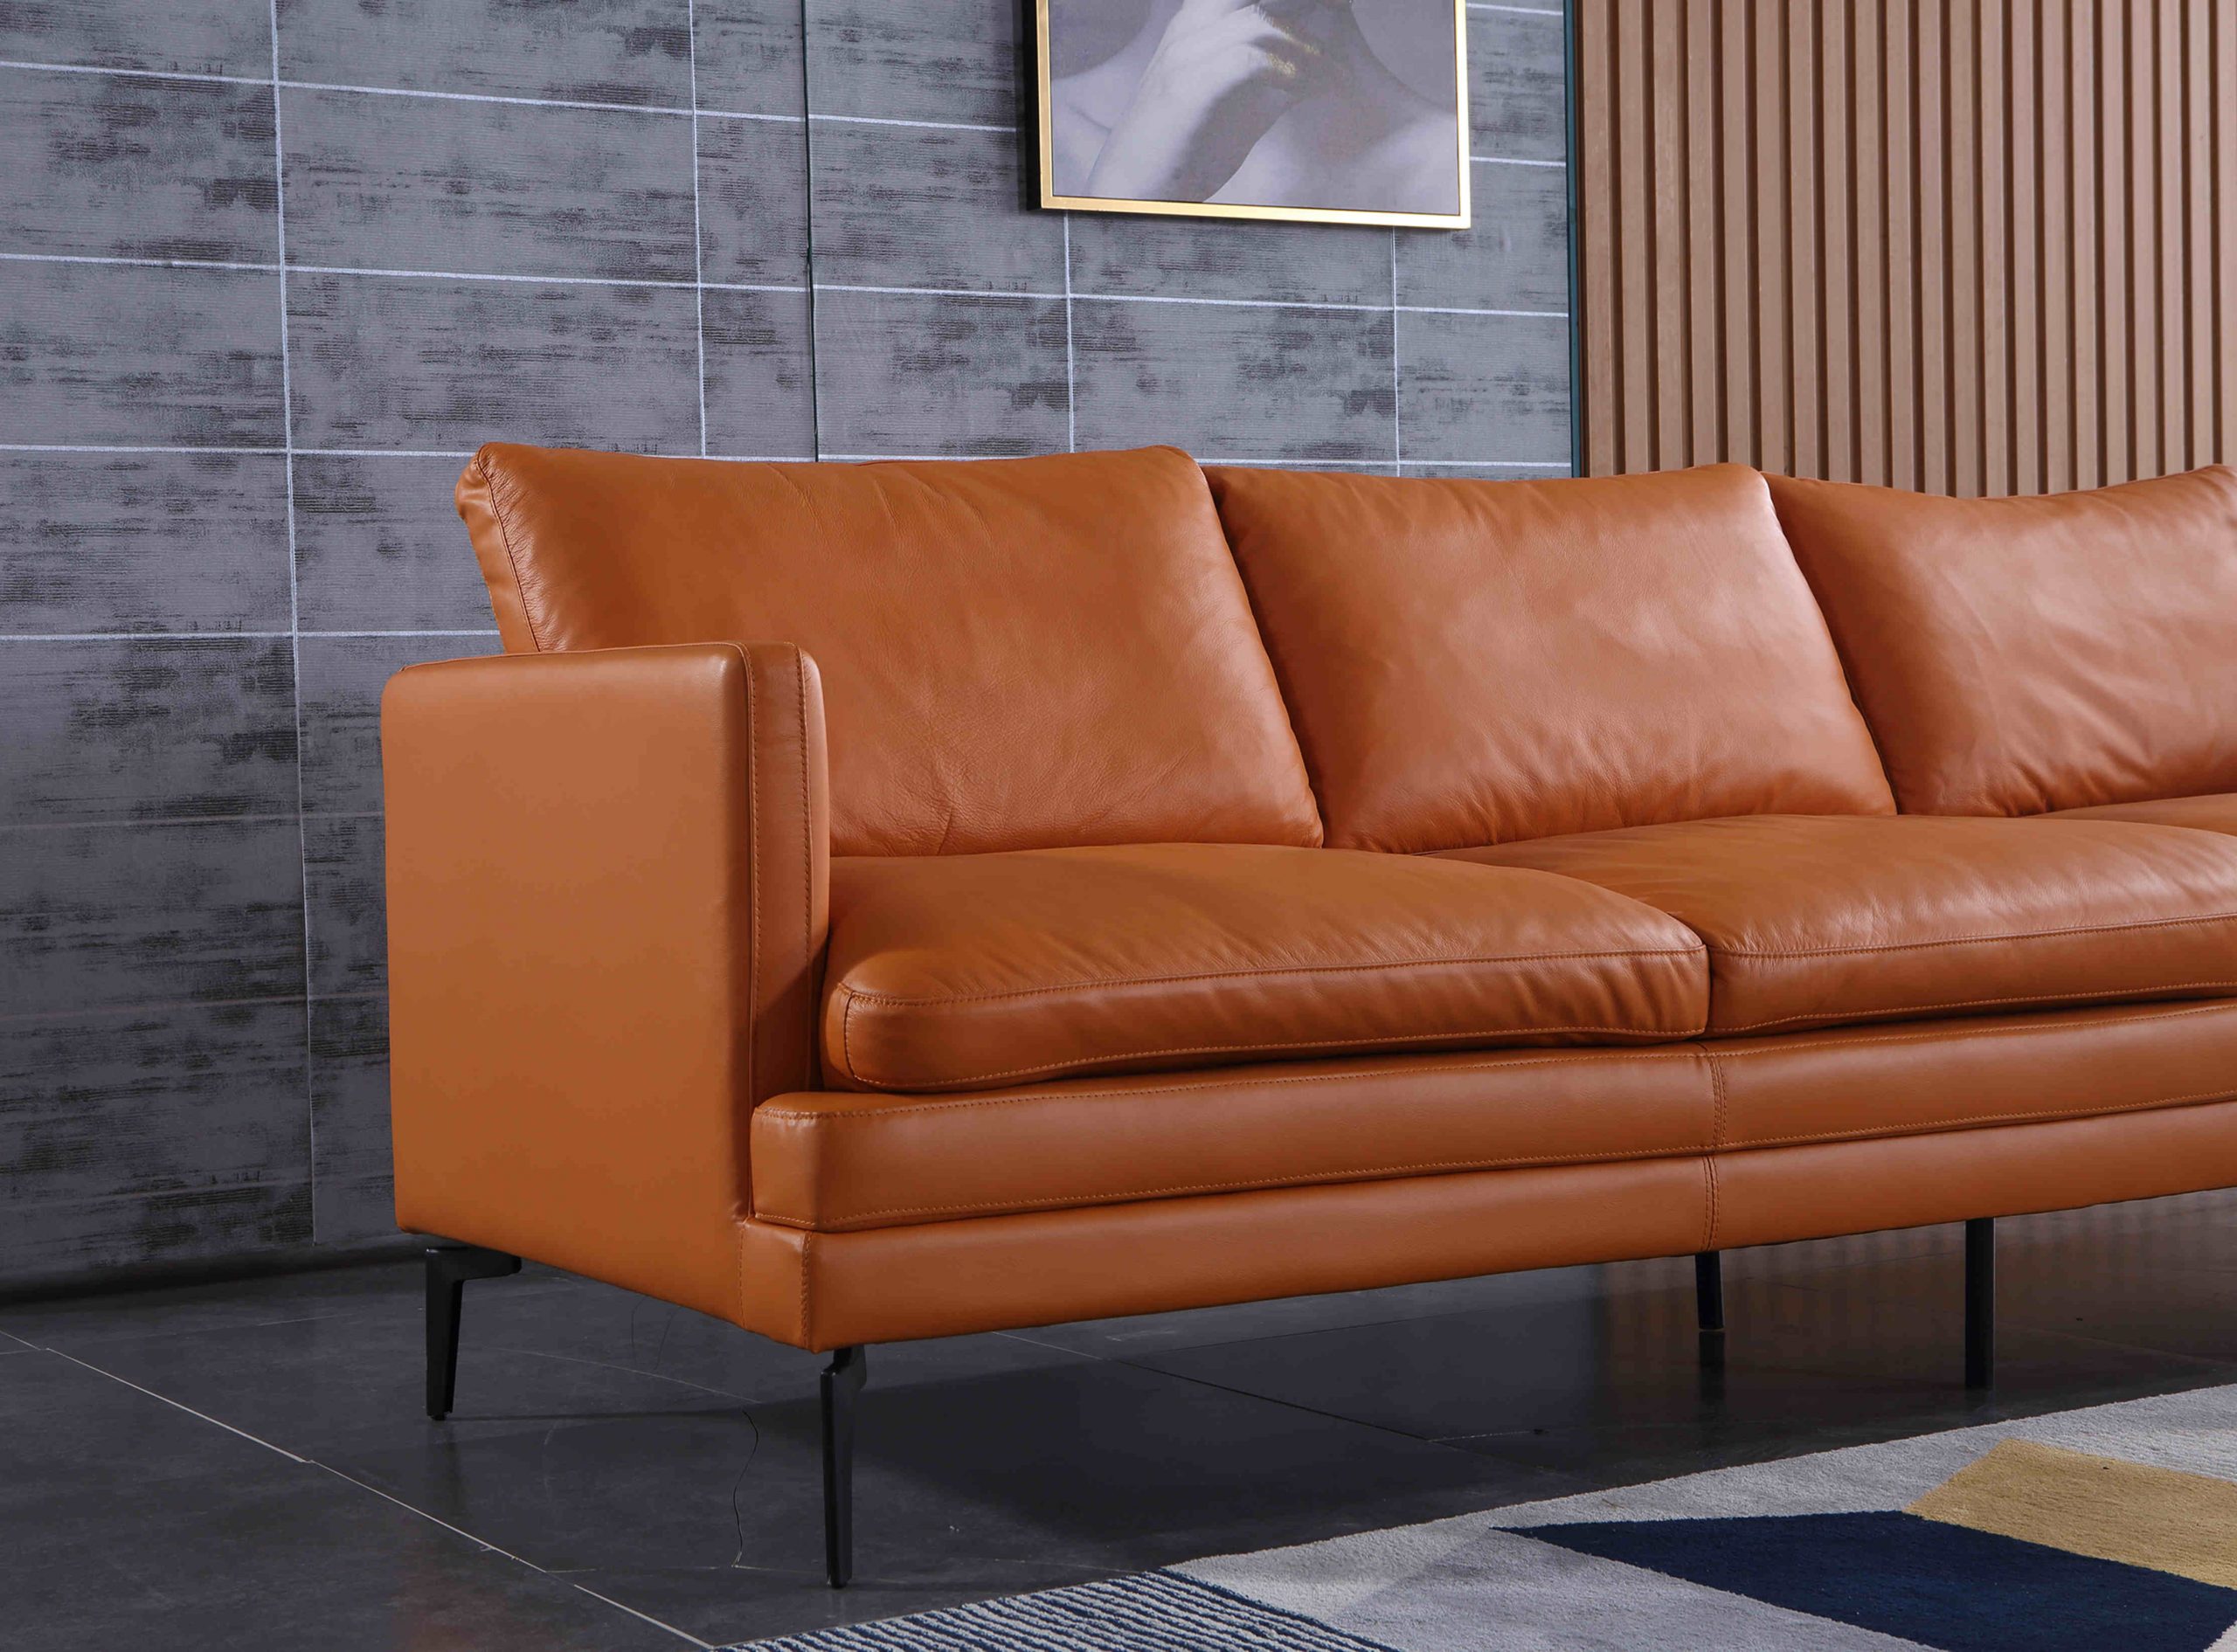 MSTF8205china new design high end genuine leather sofa livingroom home furniture apartment furniture modern solid wood sofa -furbyme (30)